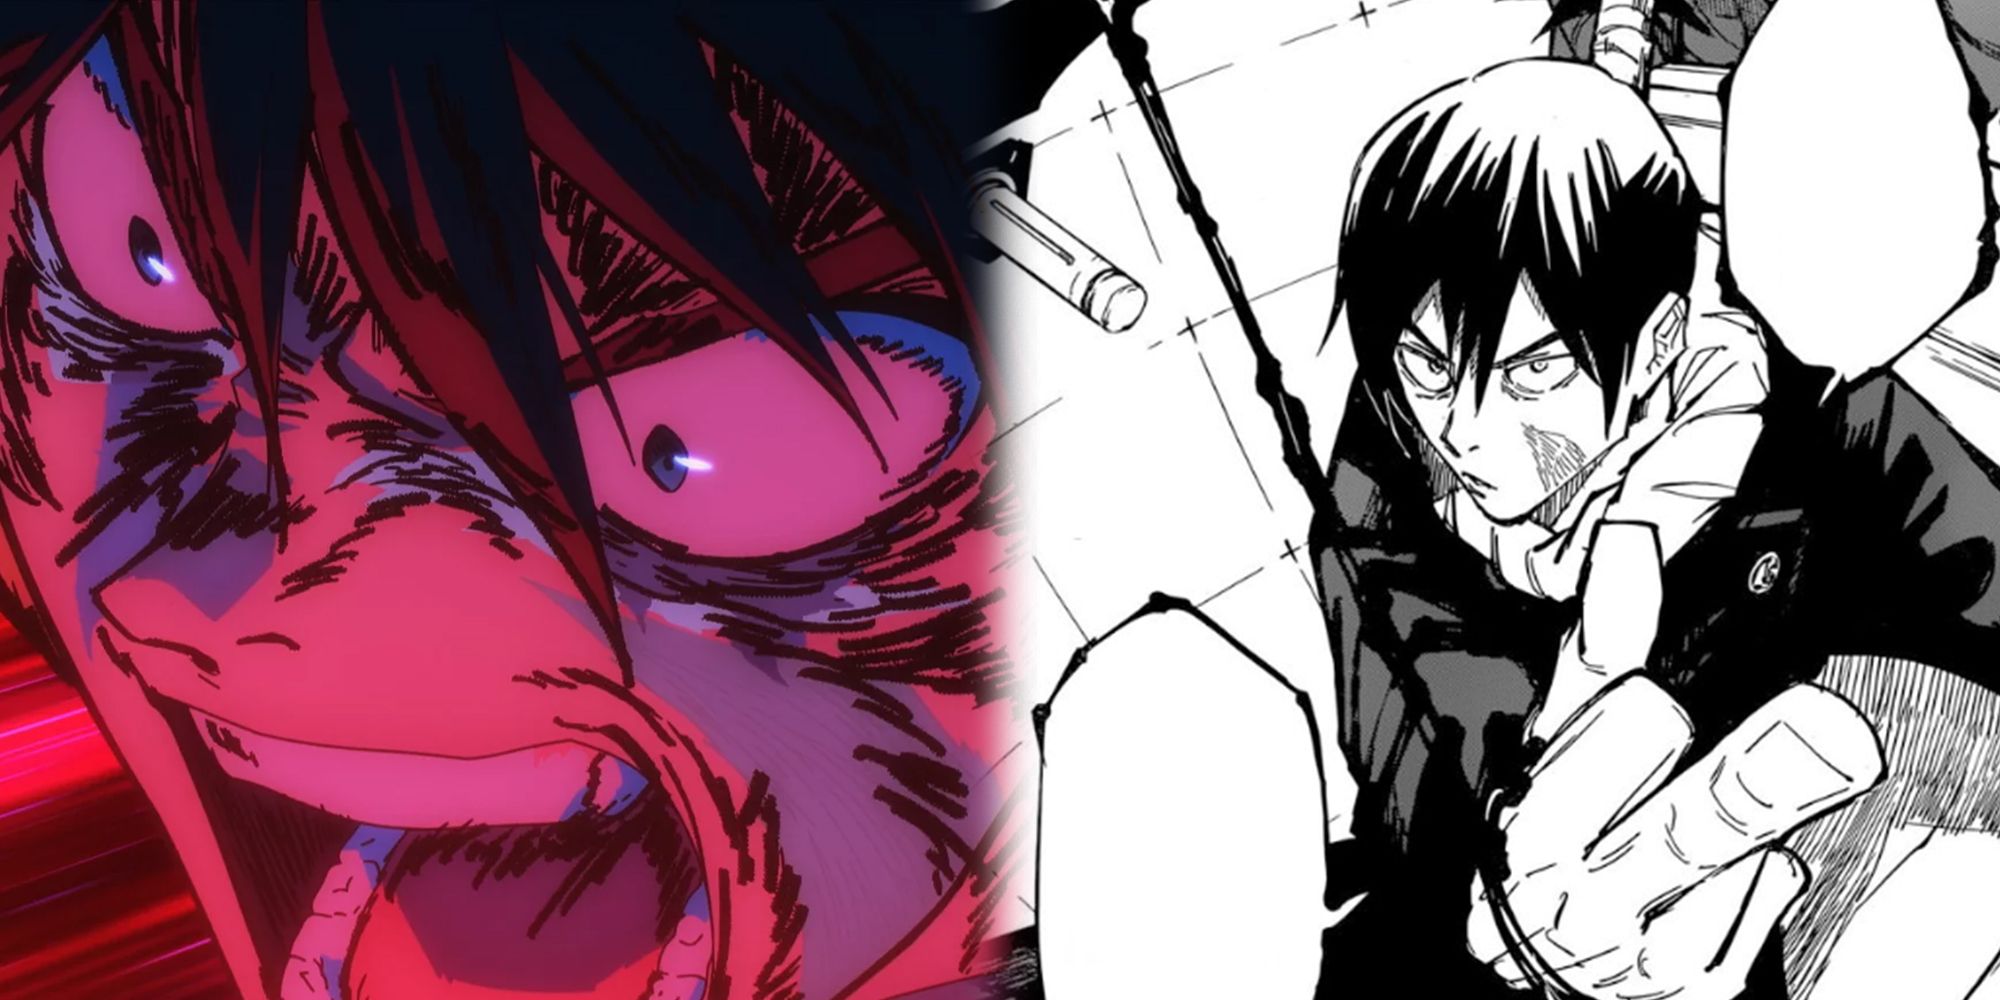 Mechmaru Anime Vs Manga Comparison